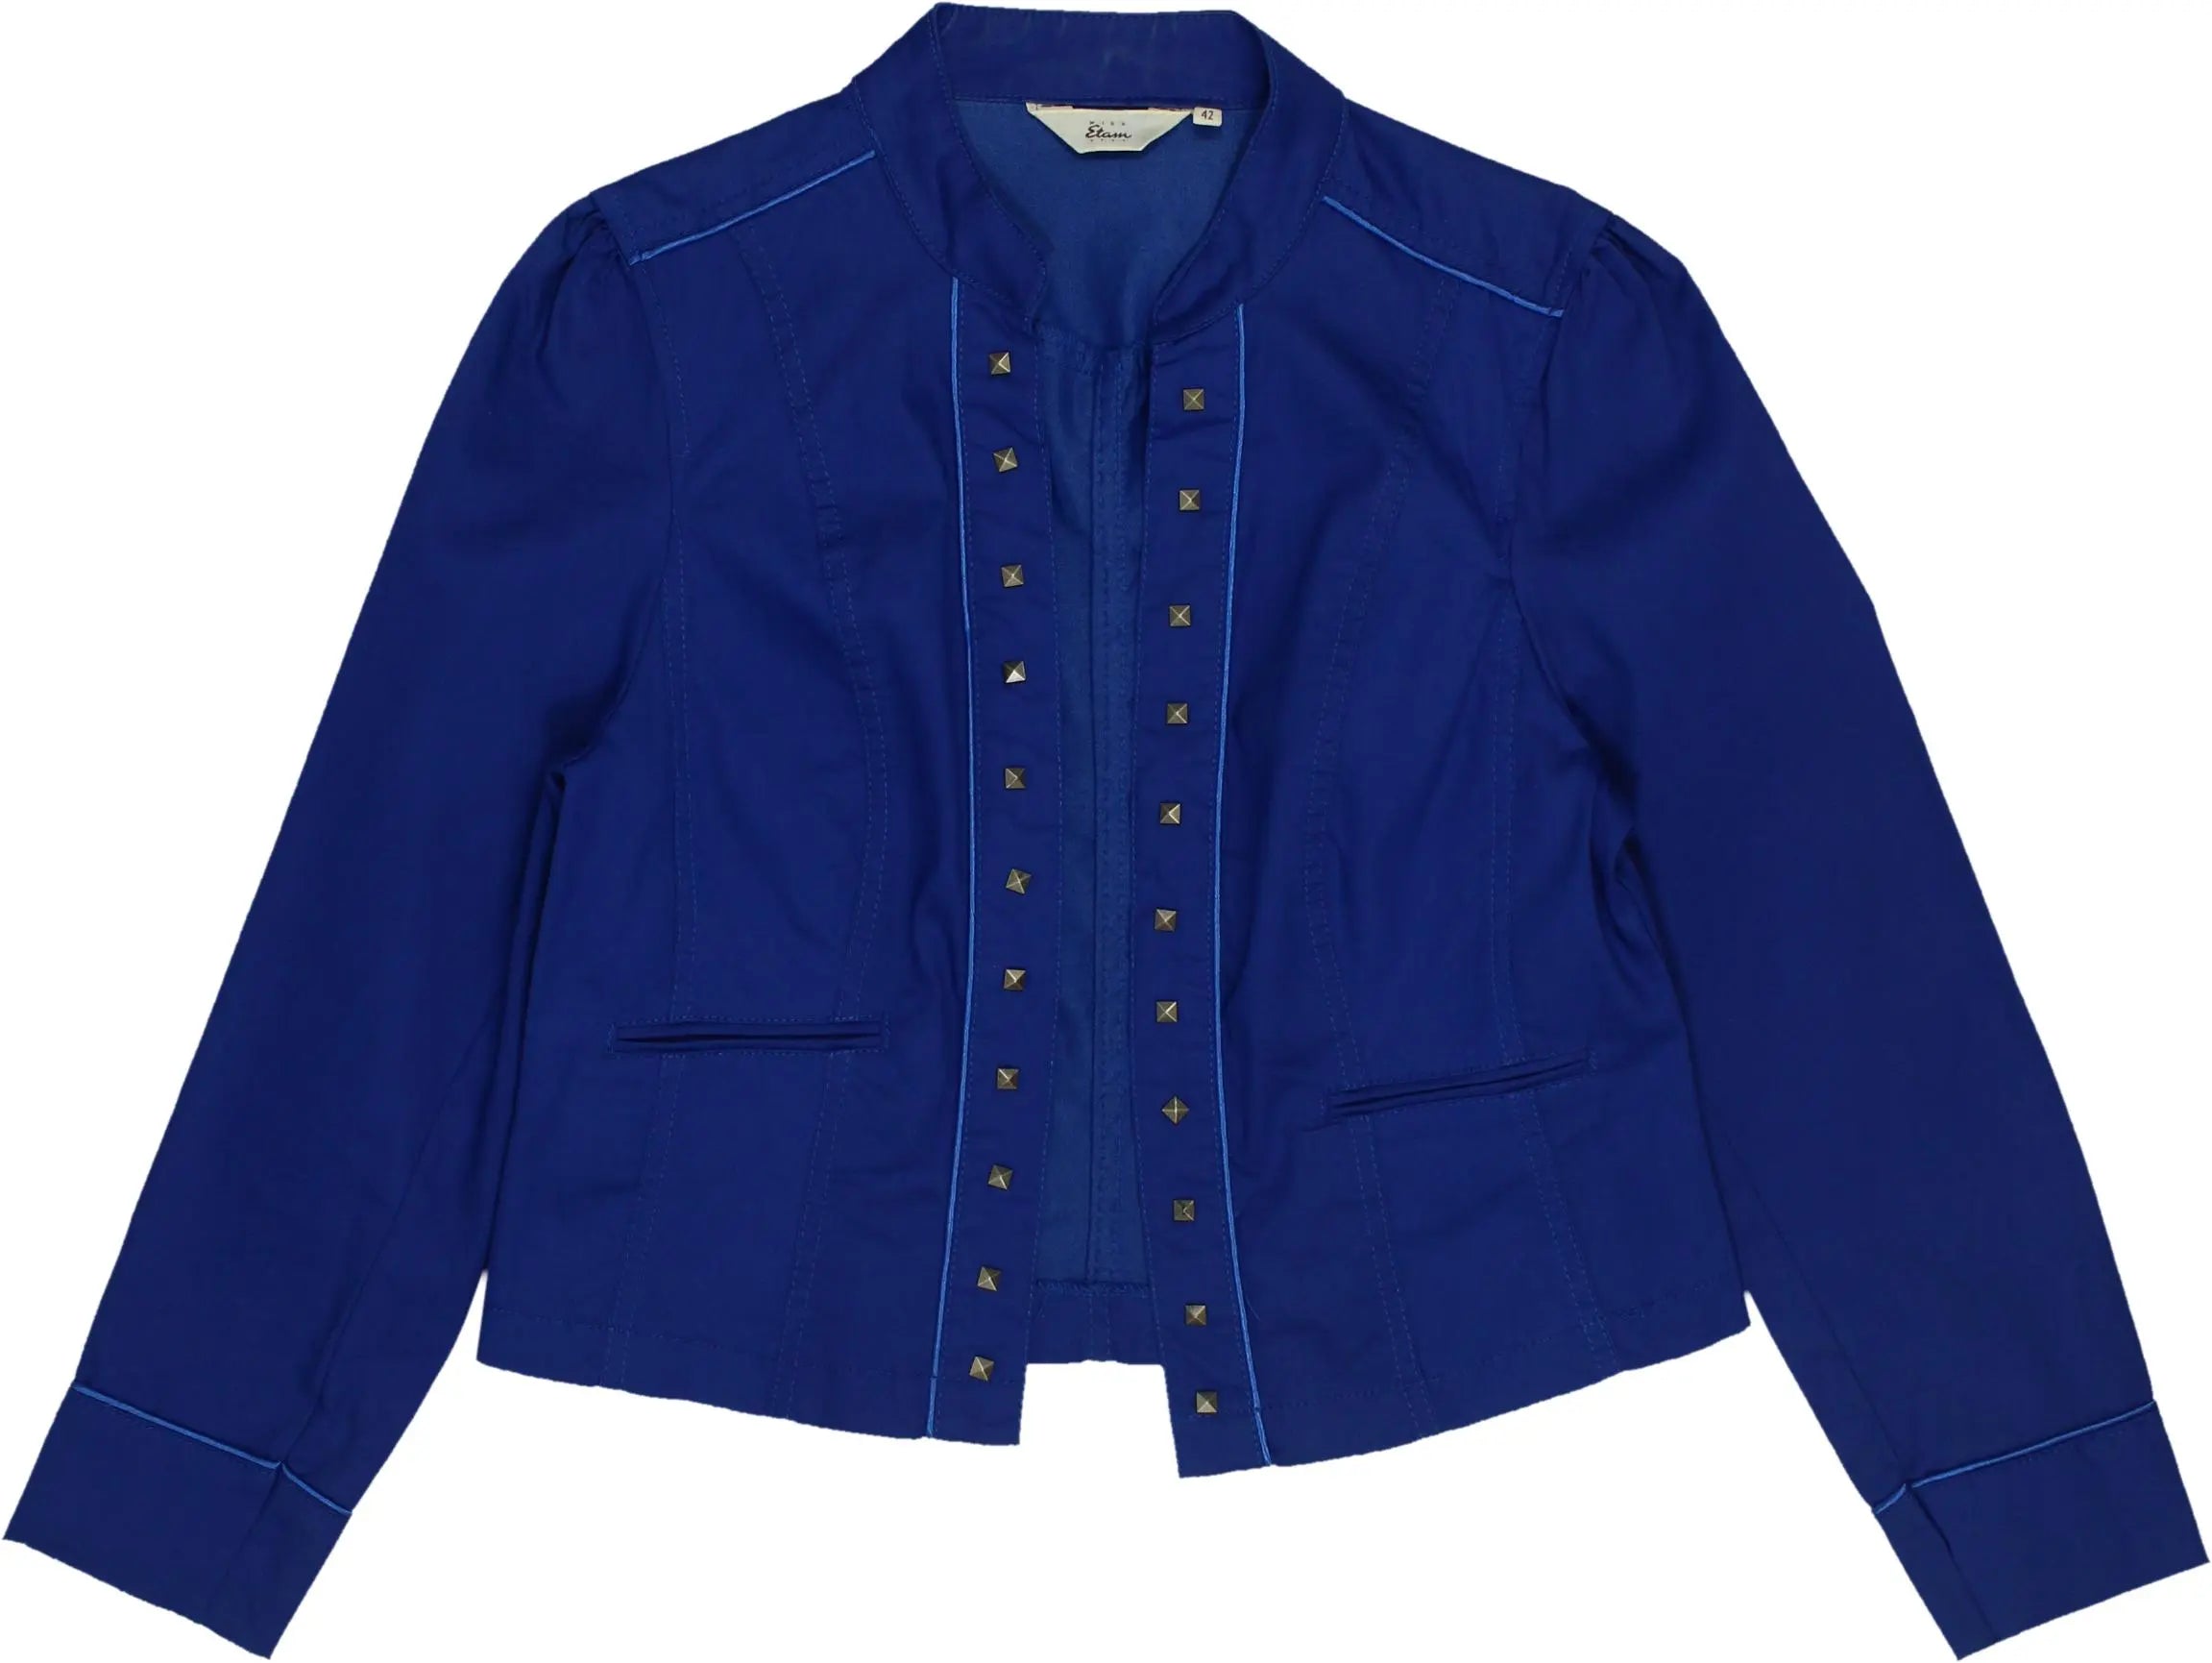 Miss Etam - Blue Jacket- ThriftTale.com - Vintage and second handclothing